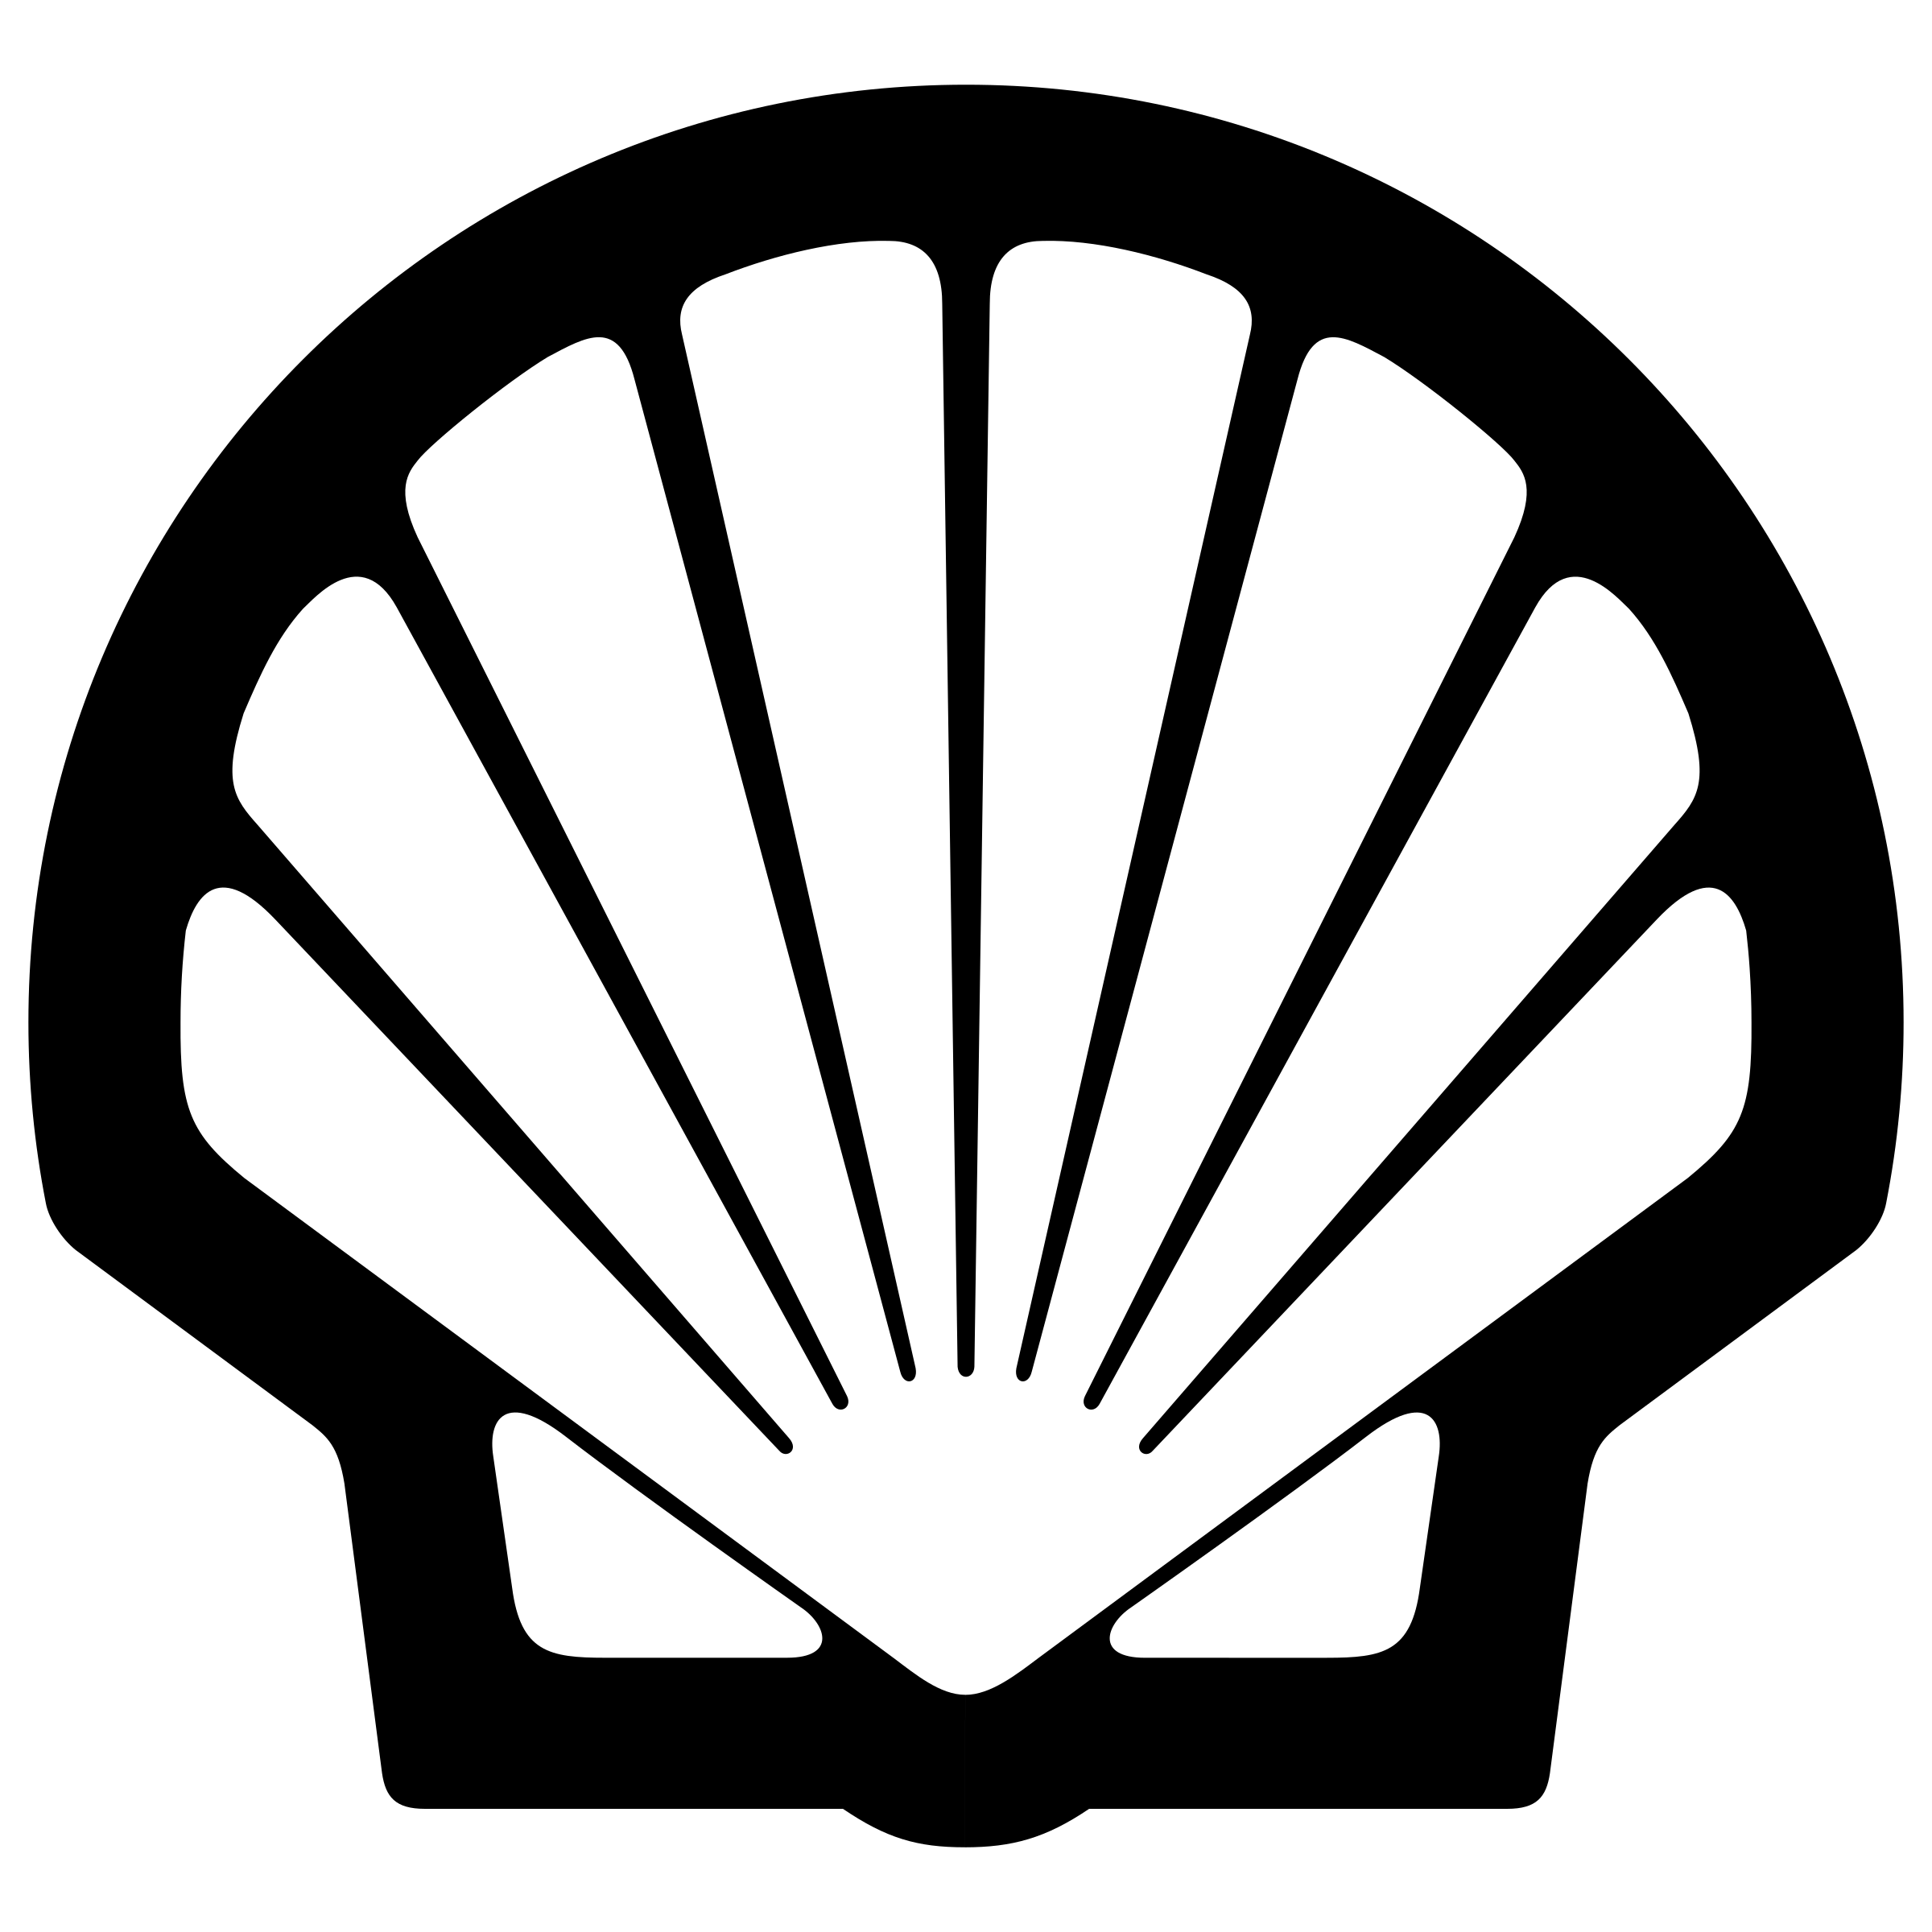 Shell Logo - Shell Logo PNG Transparent & SVG Vector - Freebie Supply